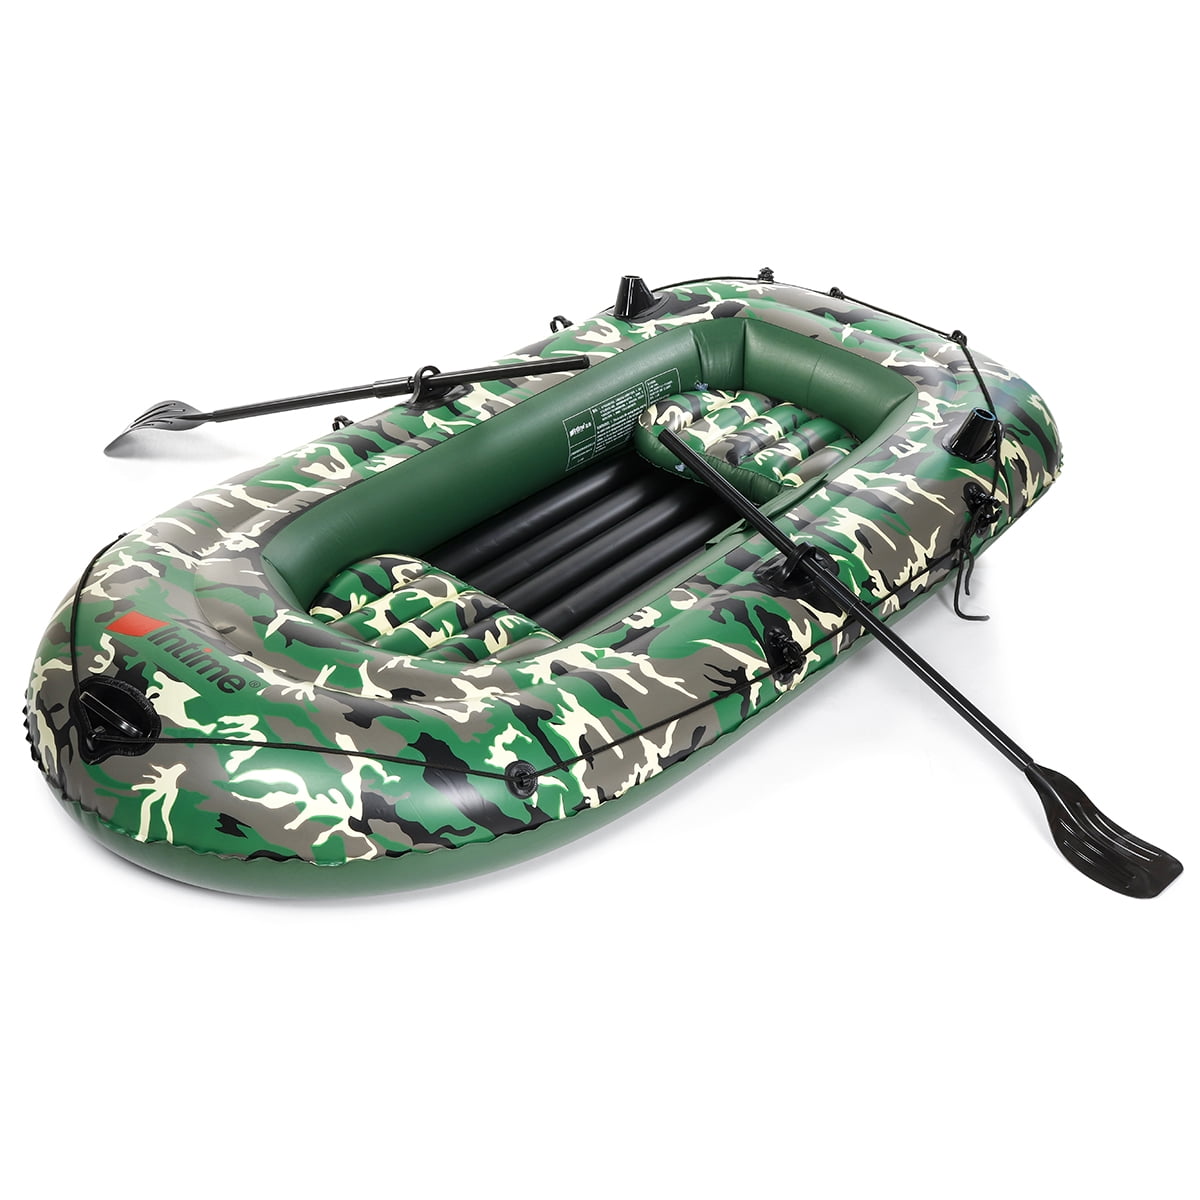 2 part PVC Glue For Inflatable boat Kayak Canoe Raft 